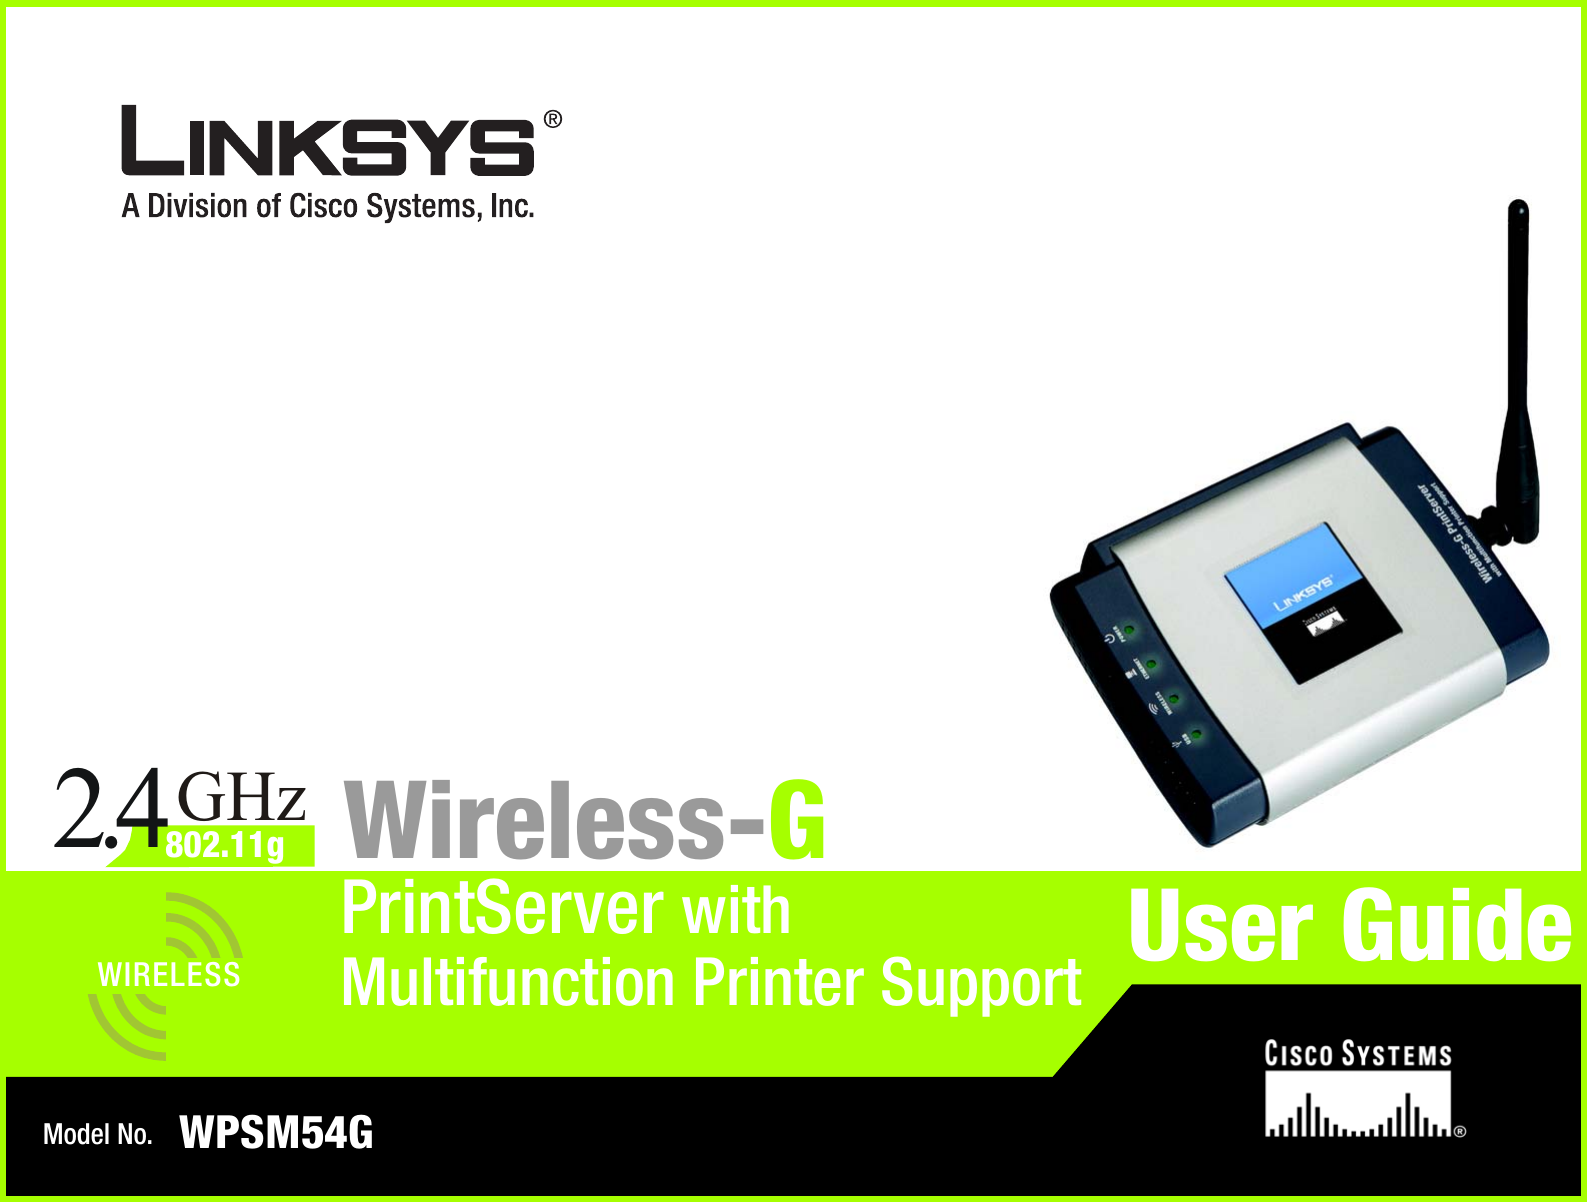 Model No.PrintServer withWireless-GWPSM54GUser GuideWIRELESSGHz2.4802.11gMultifunction Printer Support